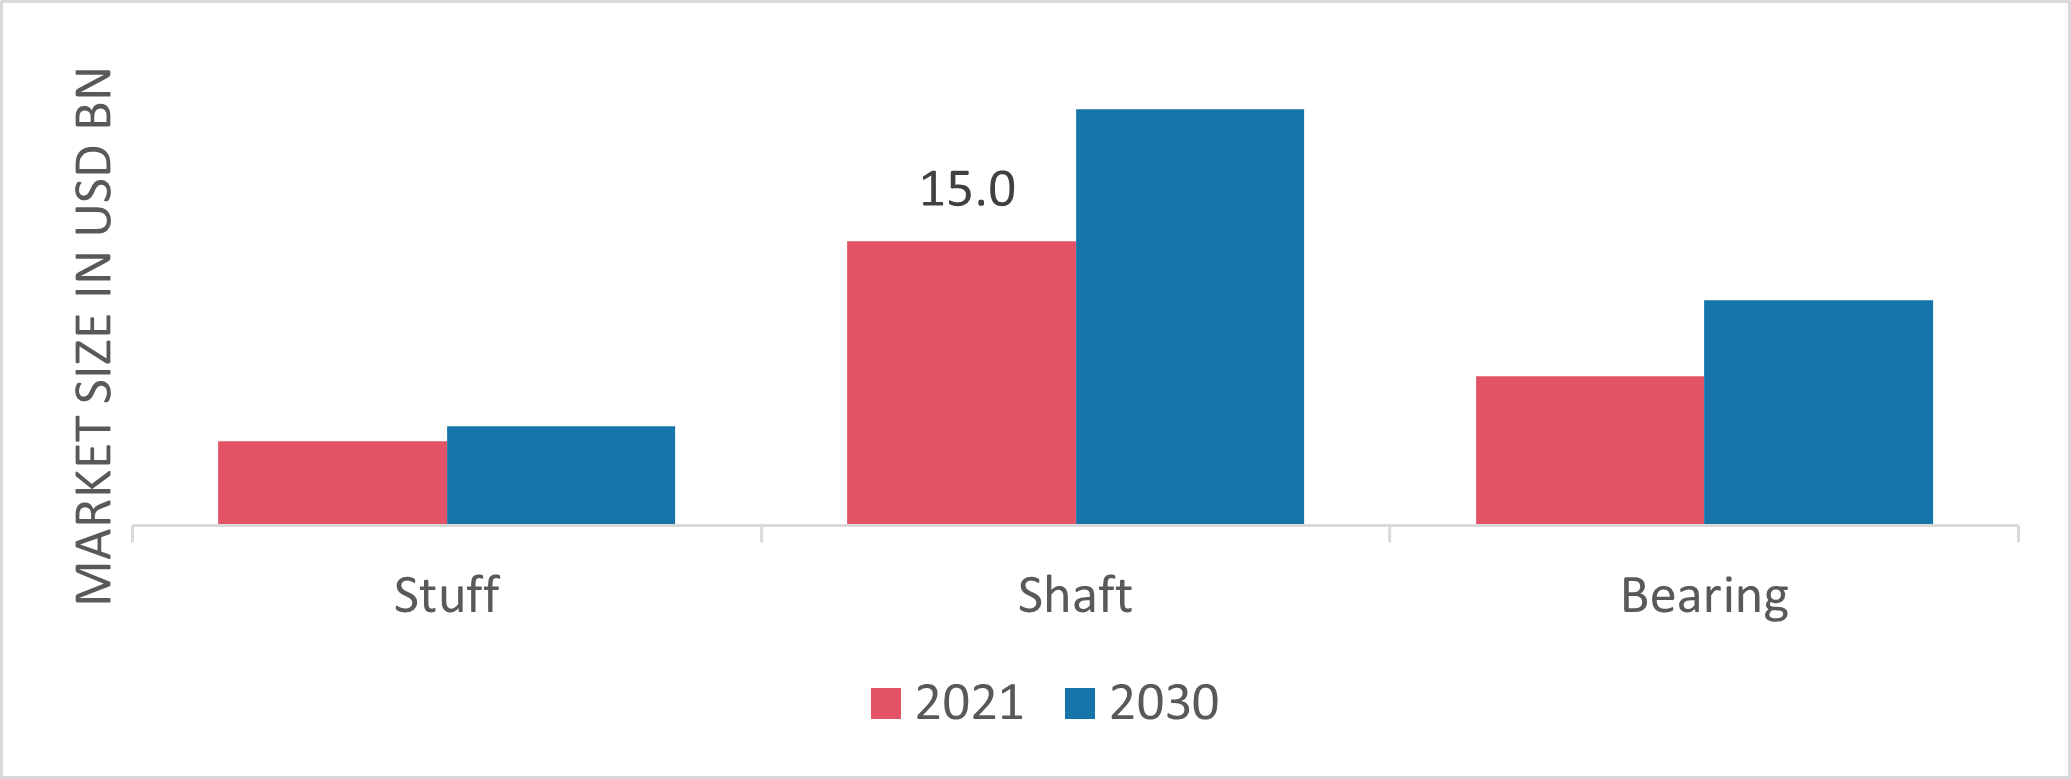 Industrial Gearbox Market, by Part, 2021 & 2030 (USD Million)